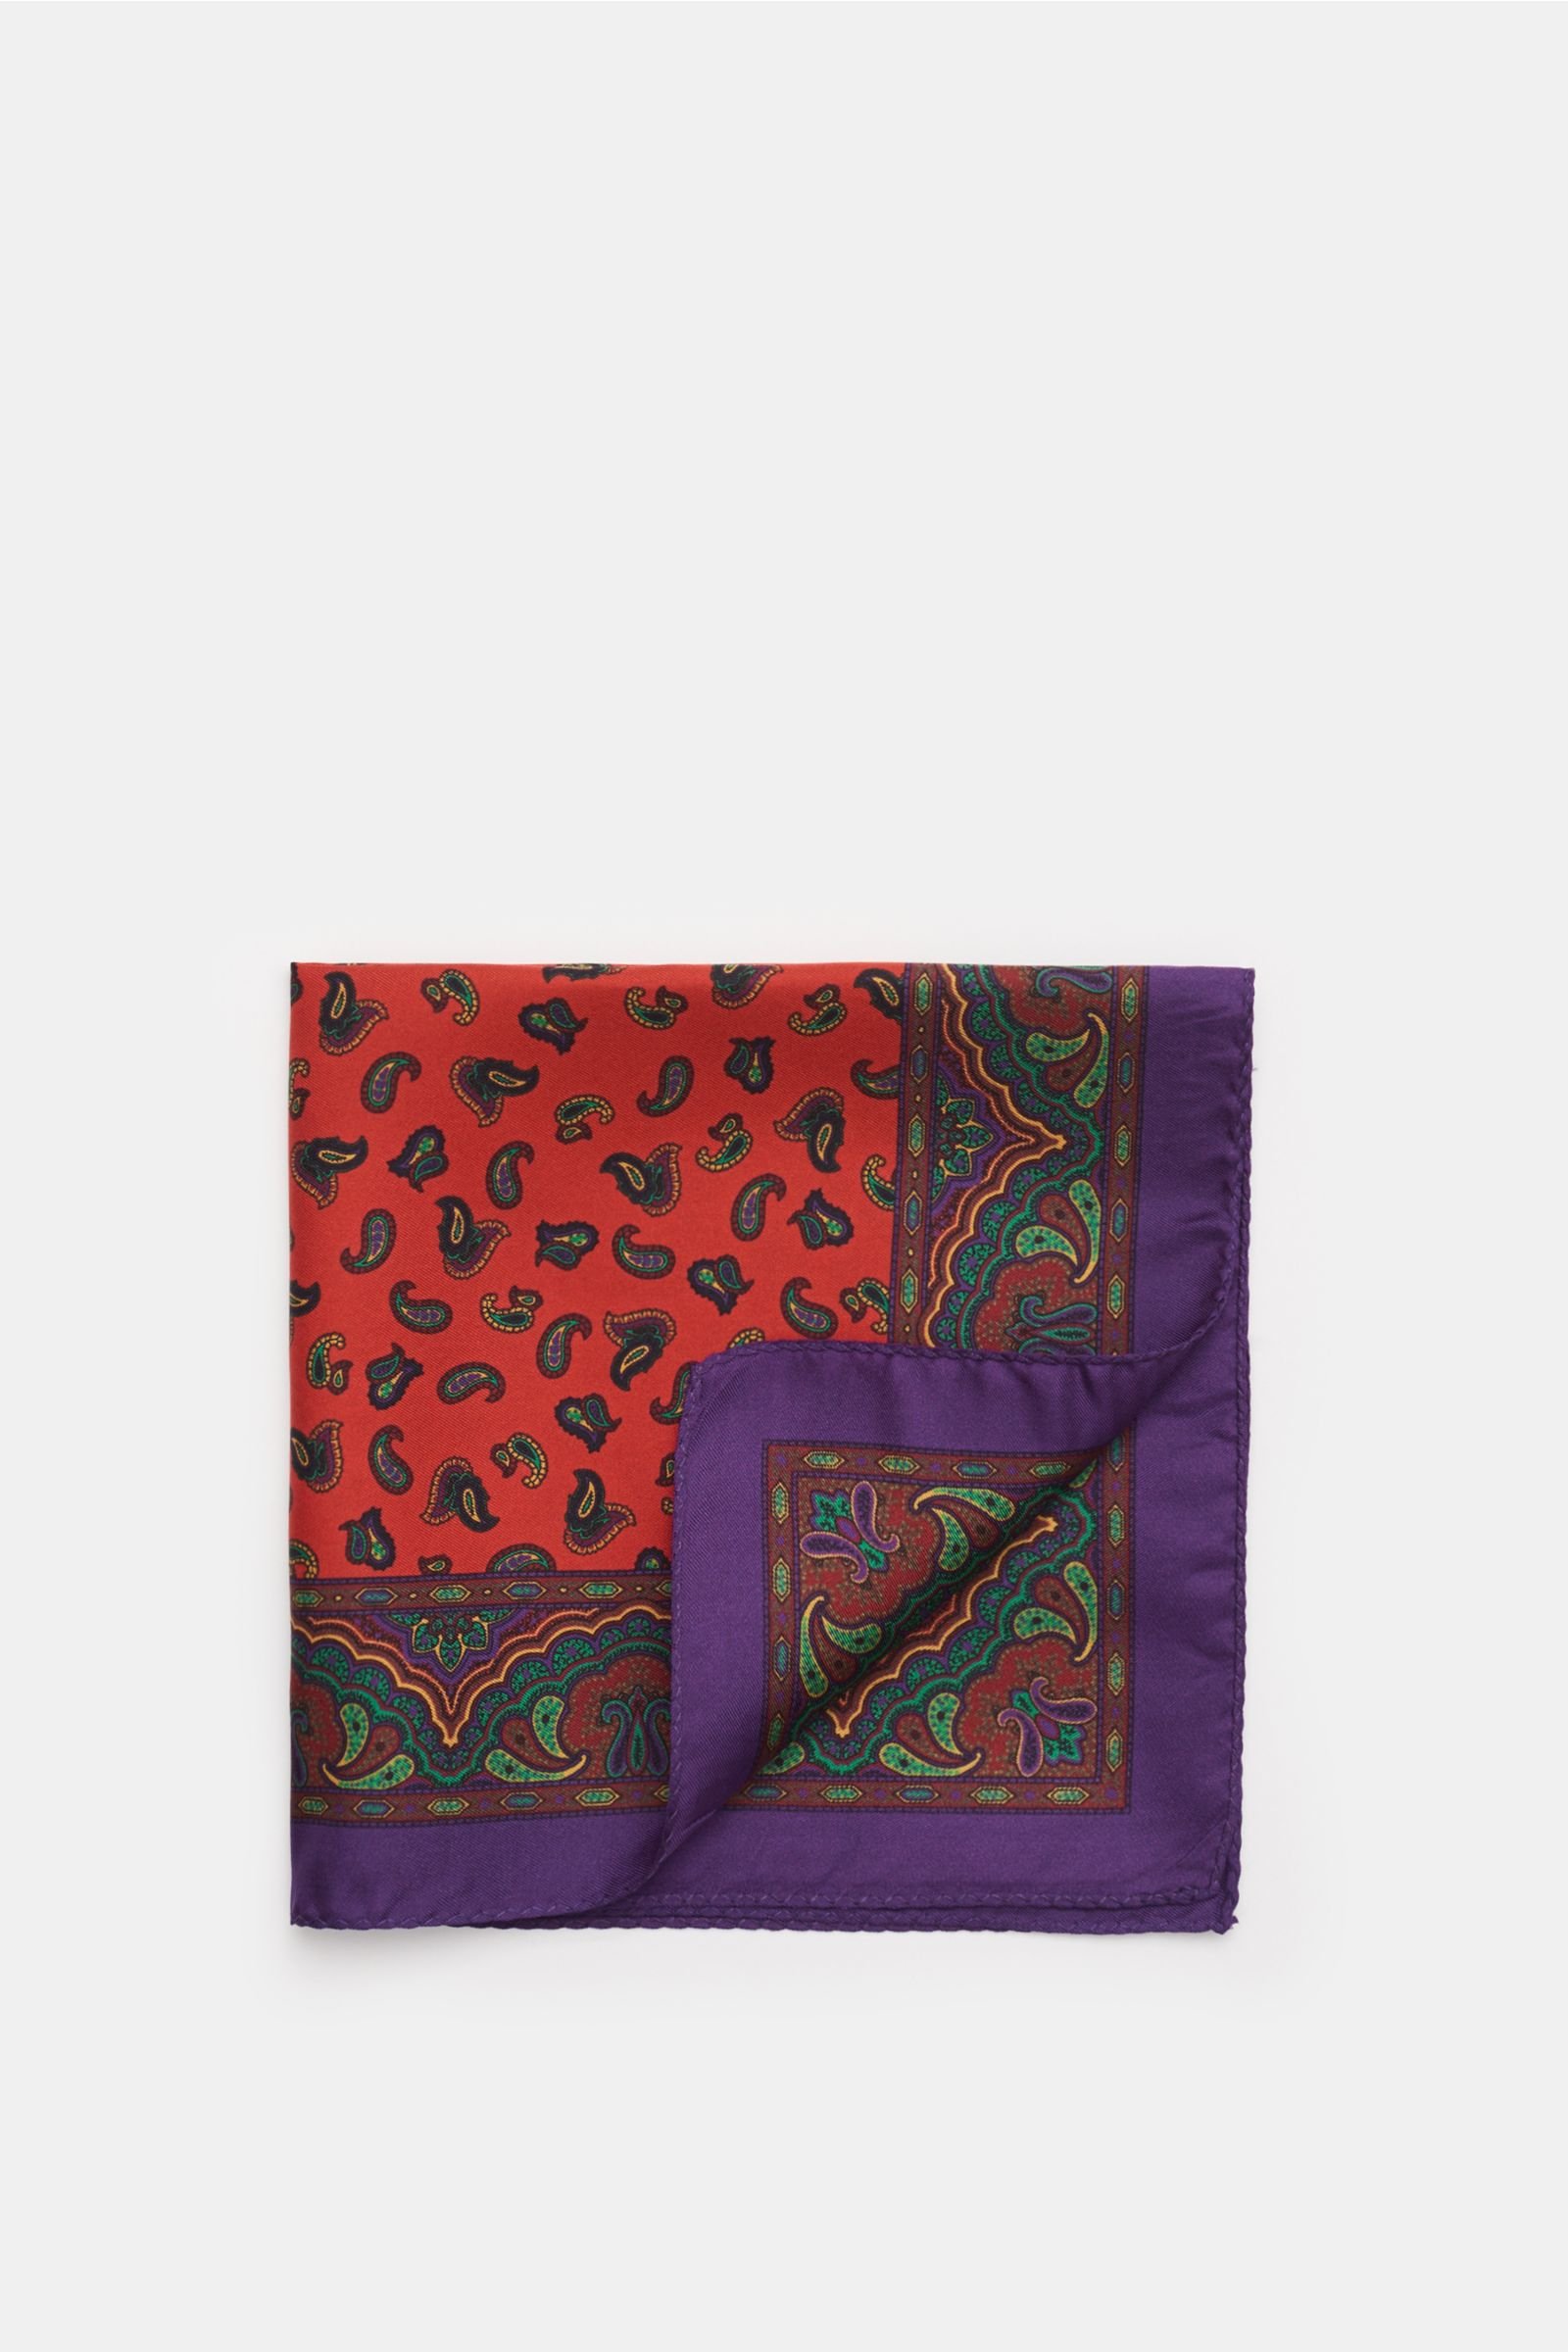 Pocket square red/purple patterned